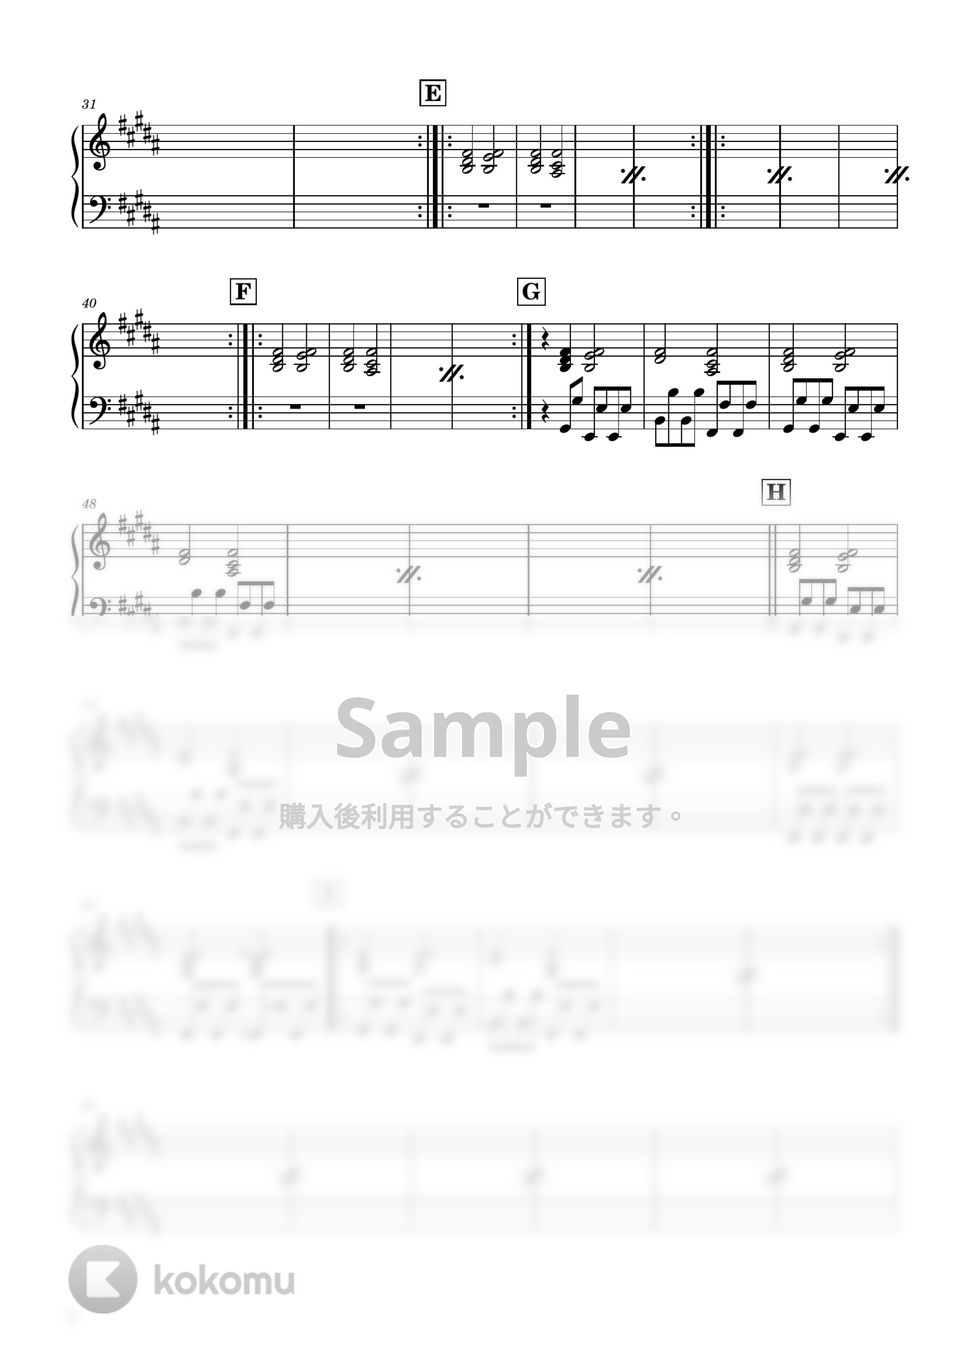 Orangestar - Henceforth (ピアノパート) by Ray